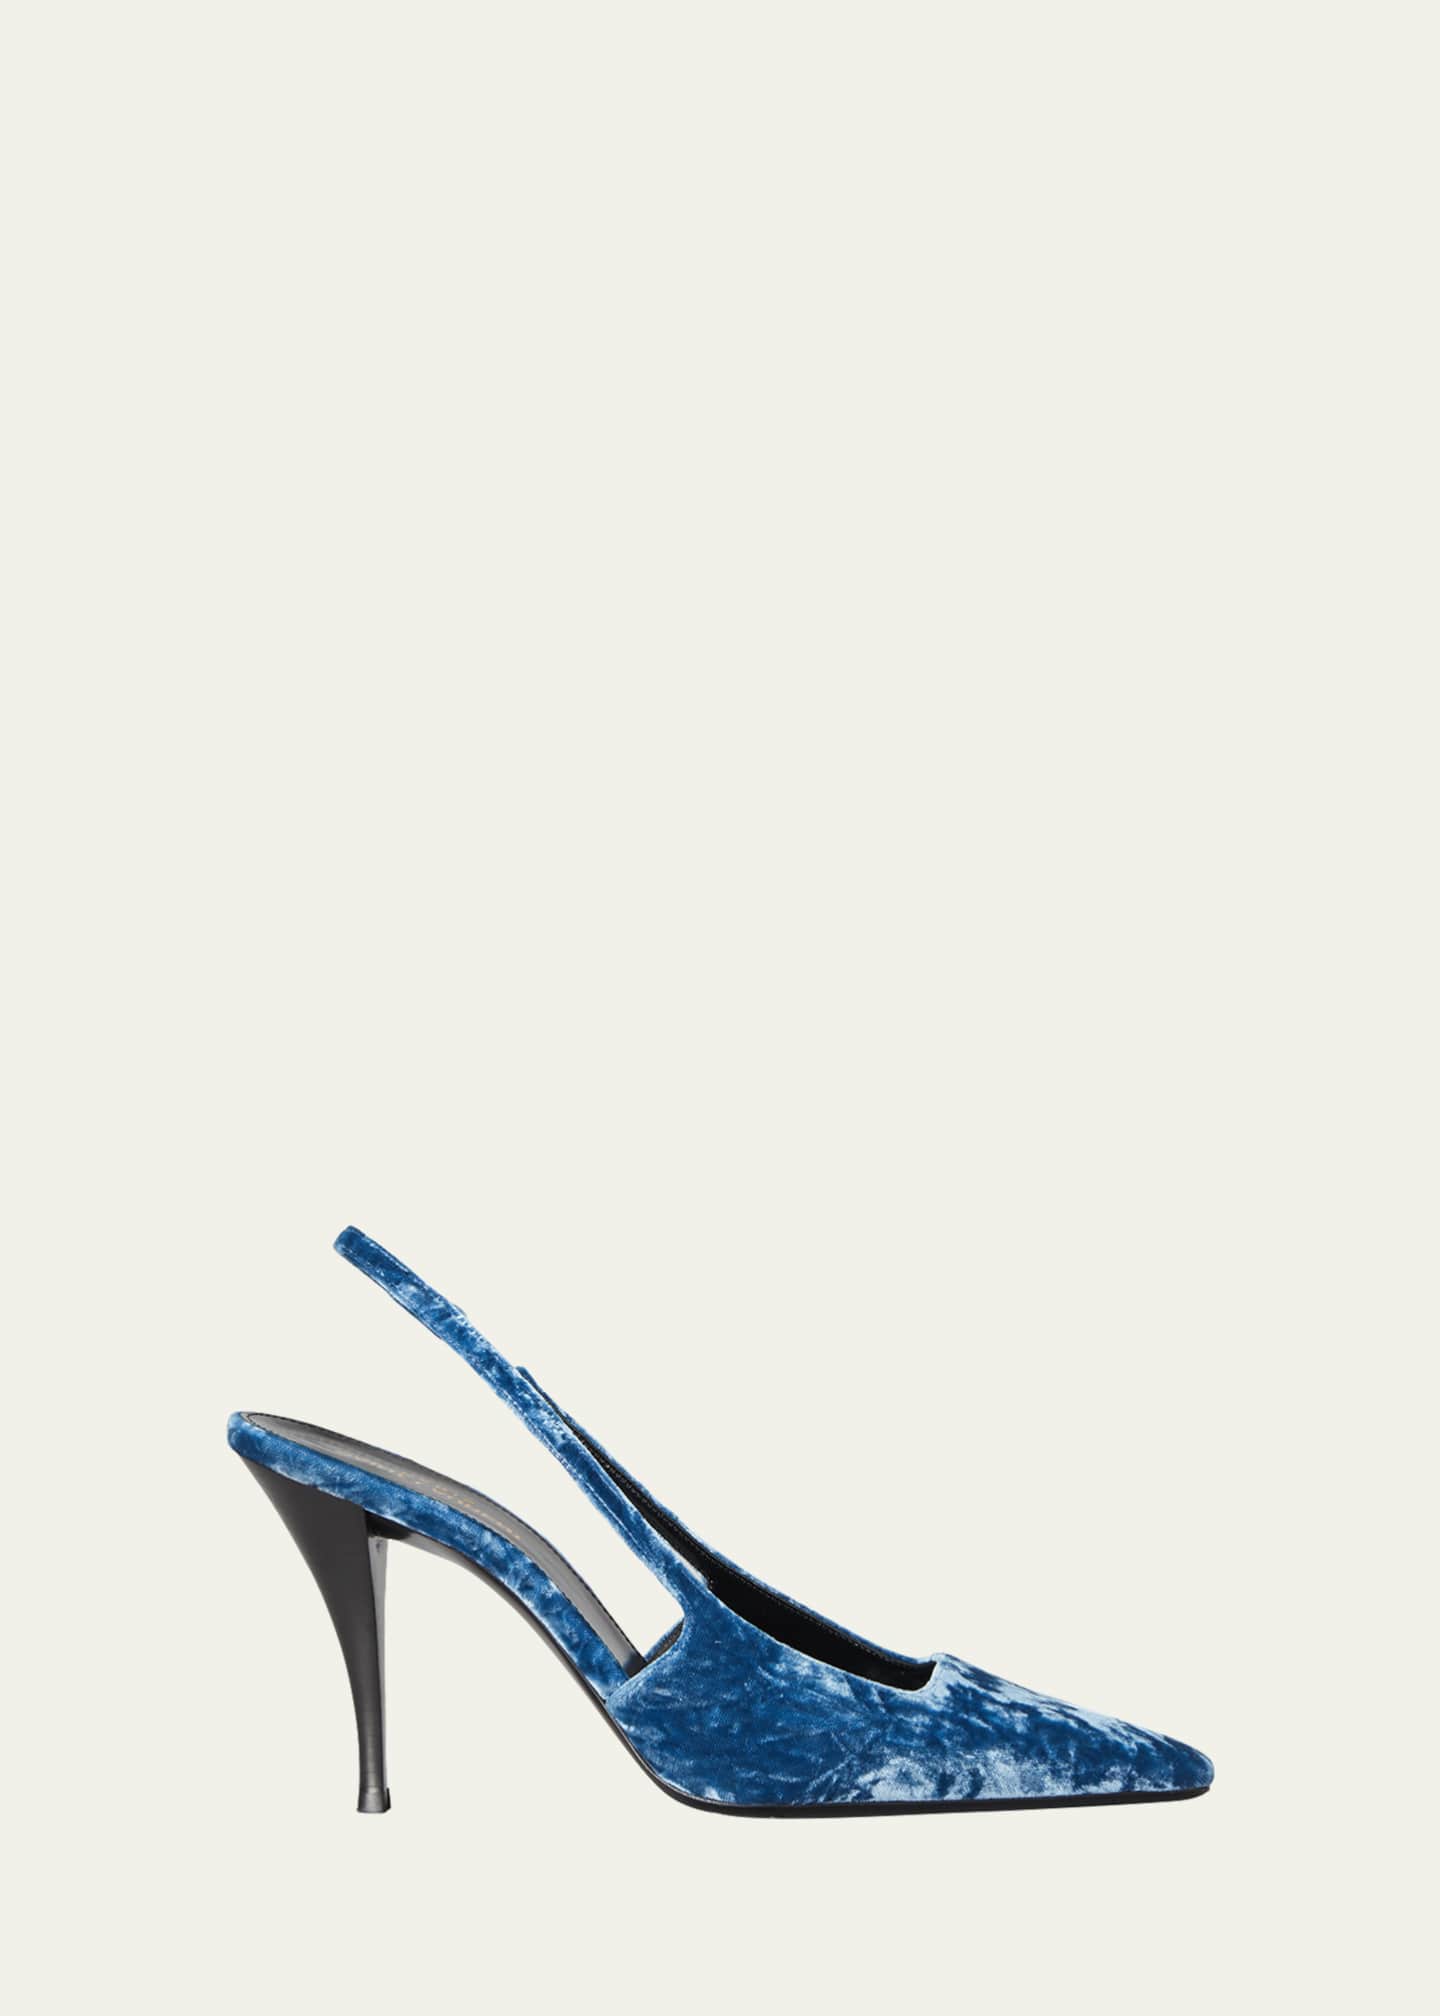 Zara - Bucked Denim Slingback Shoes - Denim Blue - Women